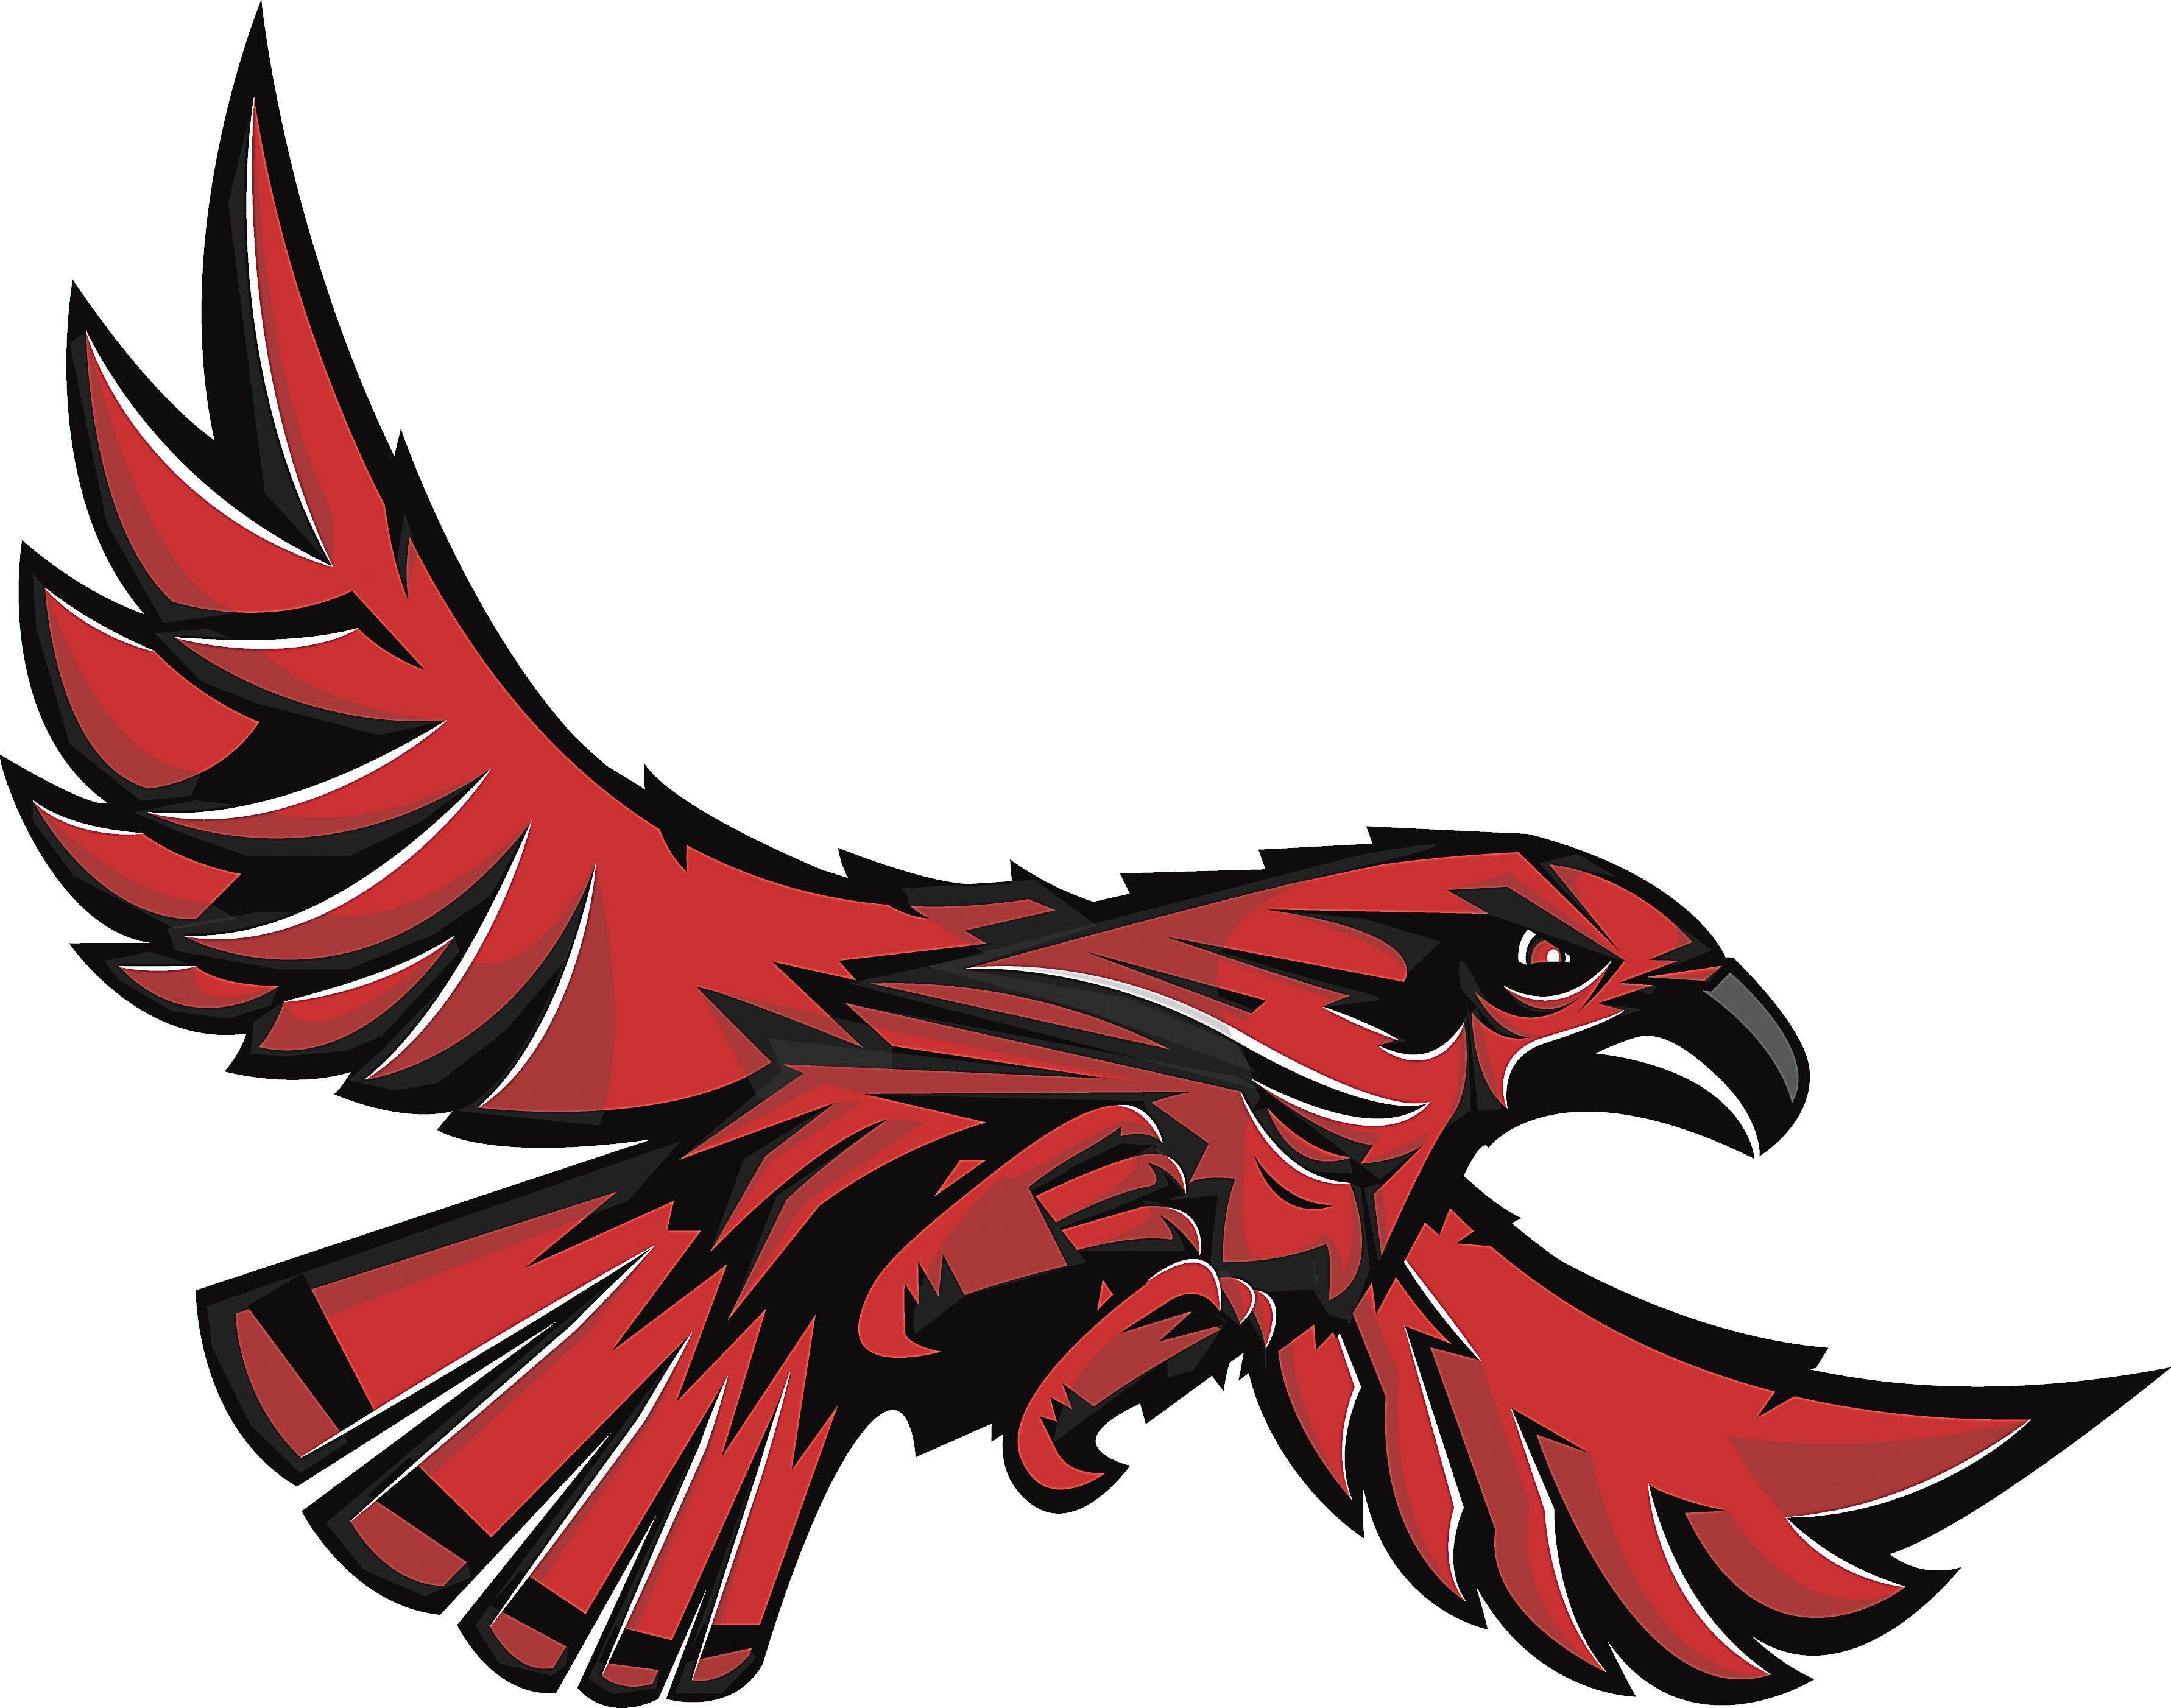 RedHawks Logo - Redhawks logo selected for Port Townsend High School | Peninsula ...